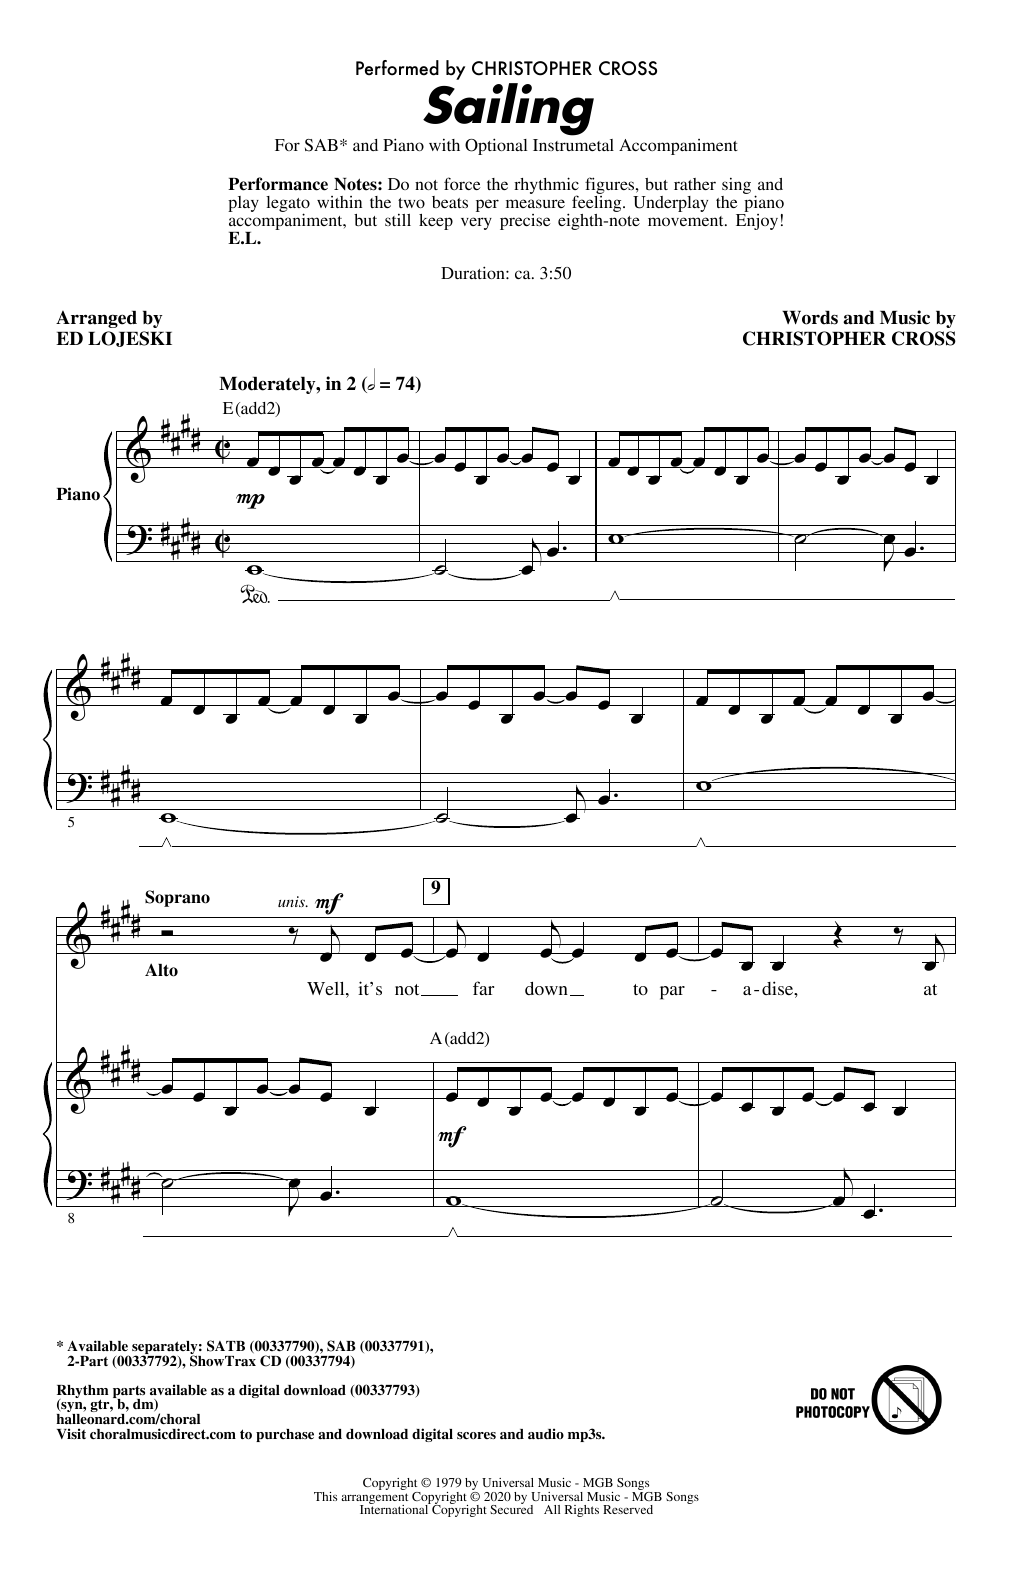 Christopher Cross Sailing (arr. Ed Lojeski) Sheet Music Notes & Chords for SAB Choir - Download or Print PDF